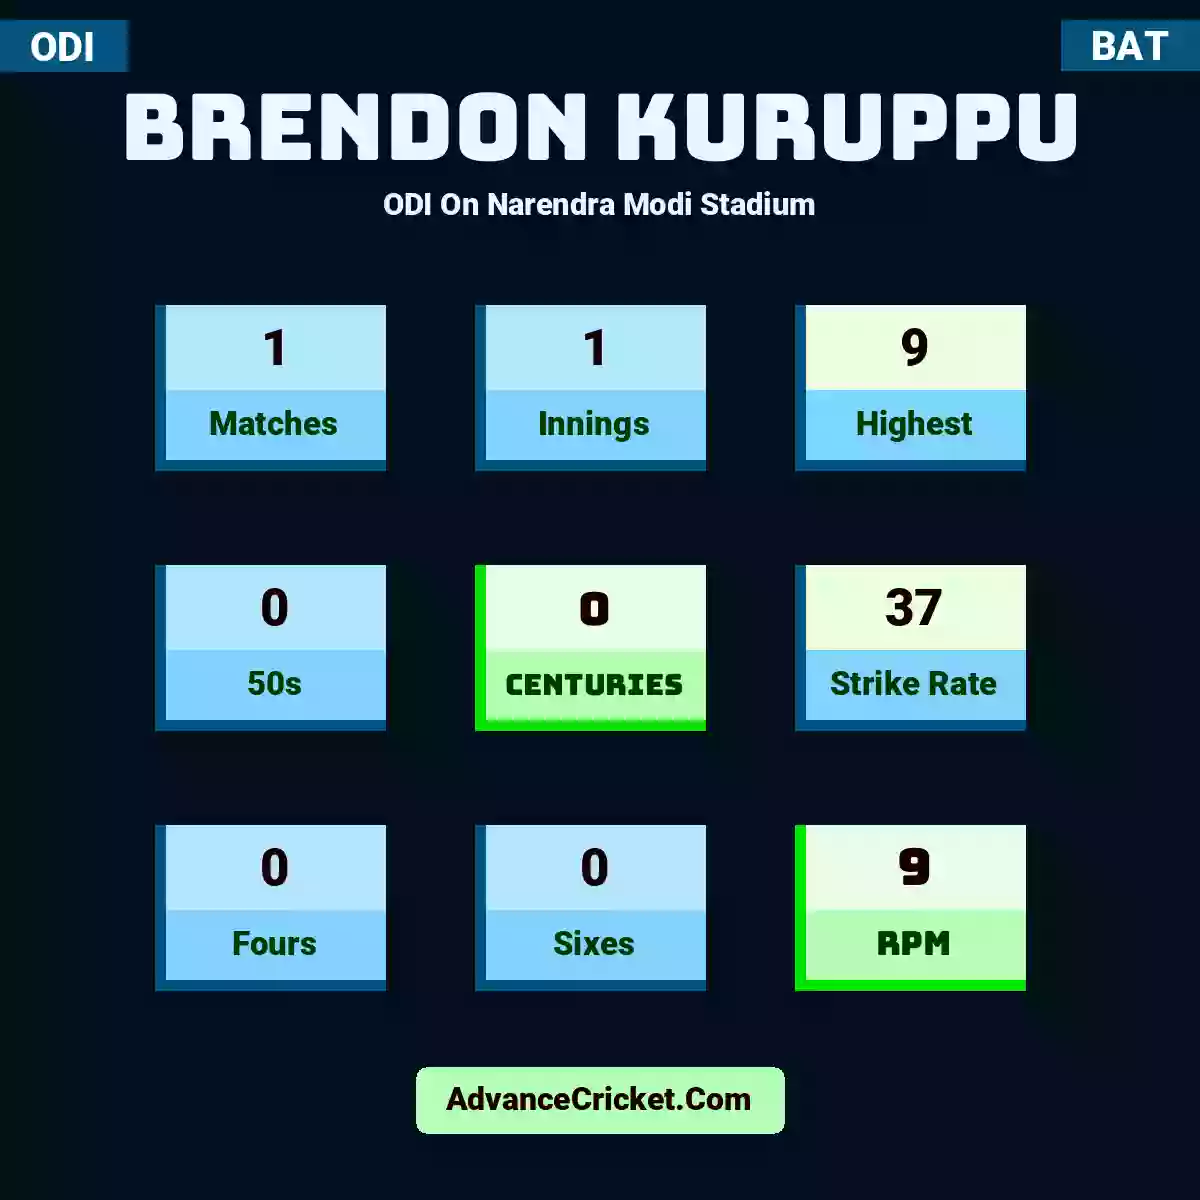 Brendon Kuruppu ODI  On Narendra Modi Stadium, Brendon Kuruppu played 1 matches, scored 9 runs as highest, 0 half-centuries, and 0 centuries, with a strike rate of 37. B.Kuruppu hit 0 fours and 0 sixes, with an RPM of 9.